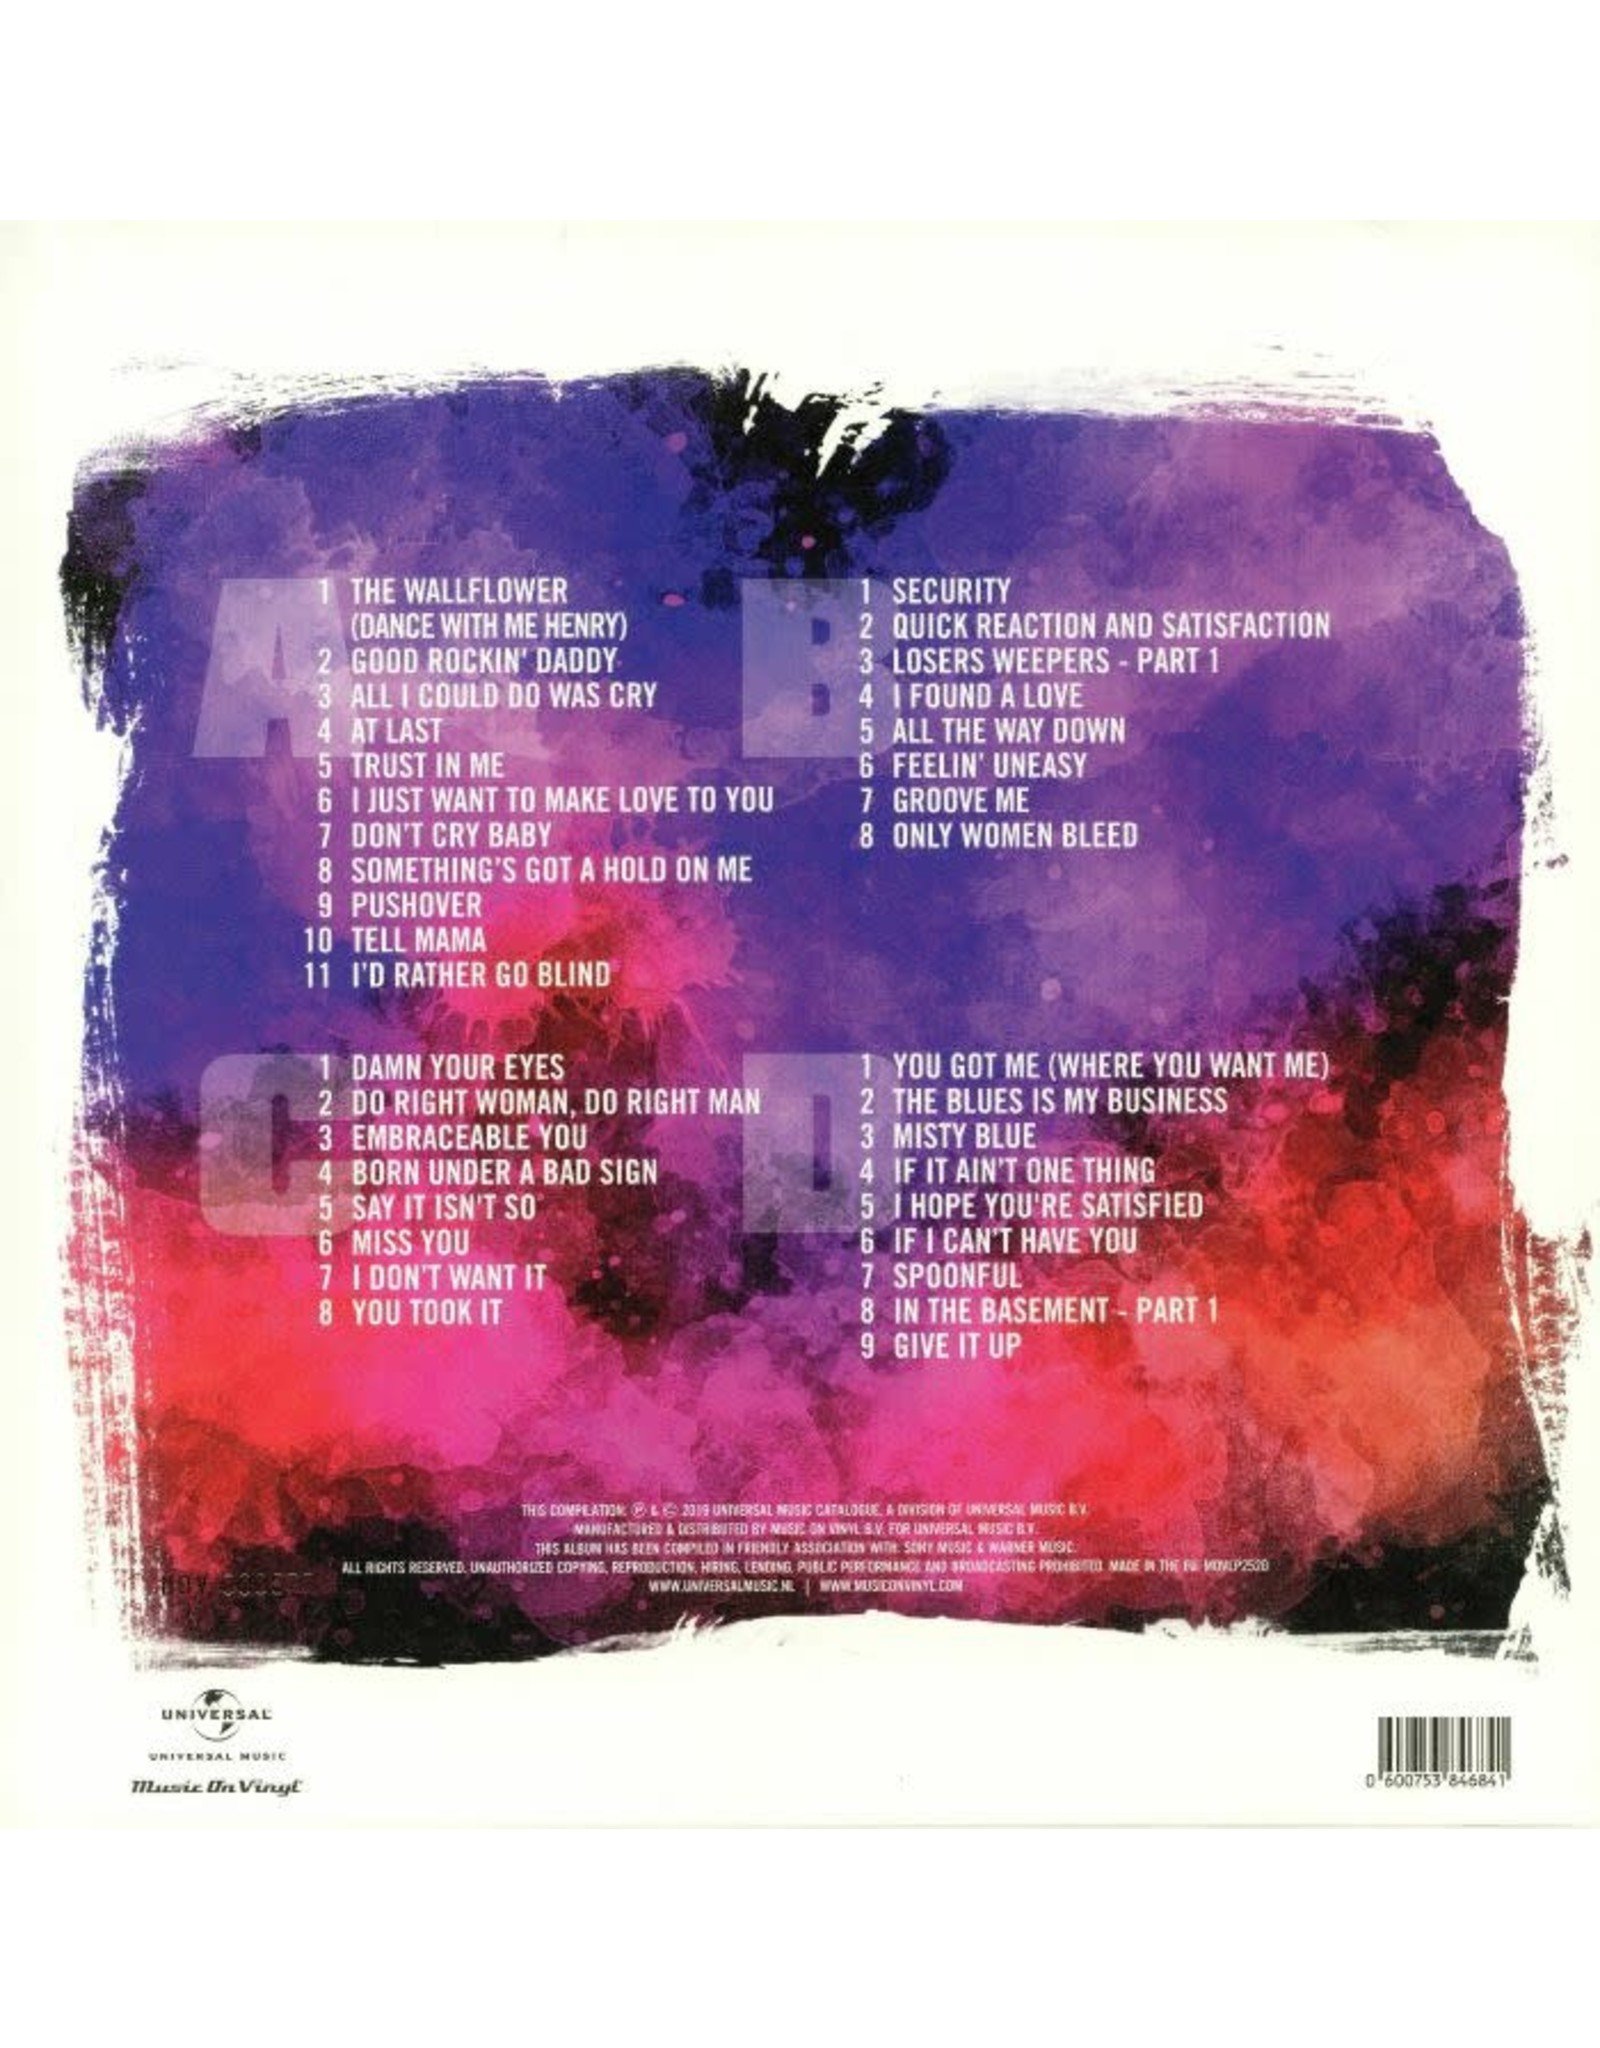 Holiday, Billie - Embraceable You [Vinyl] -  Music